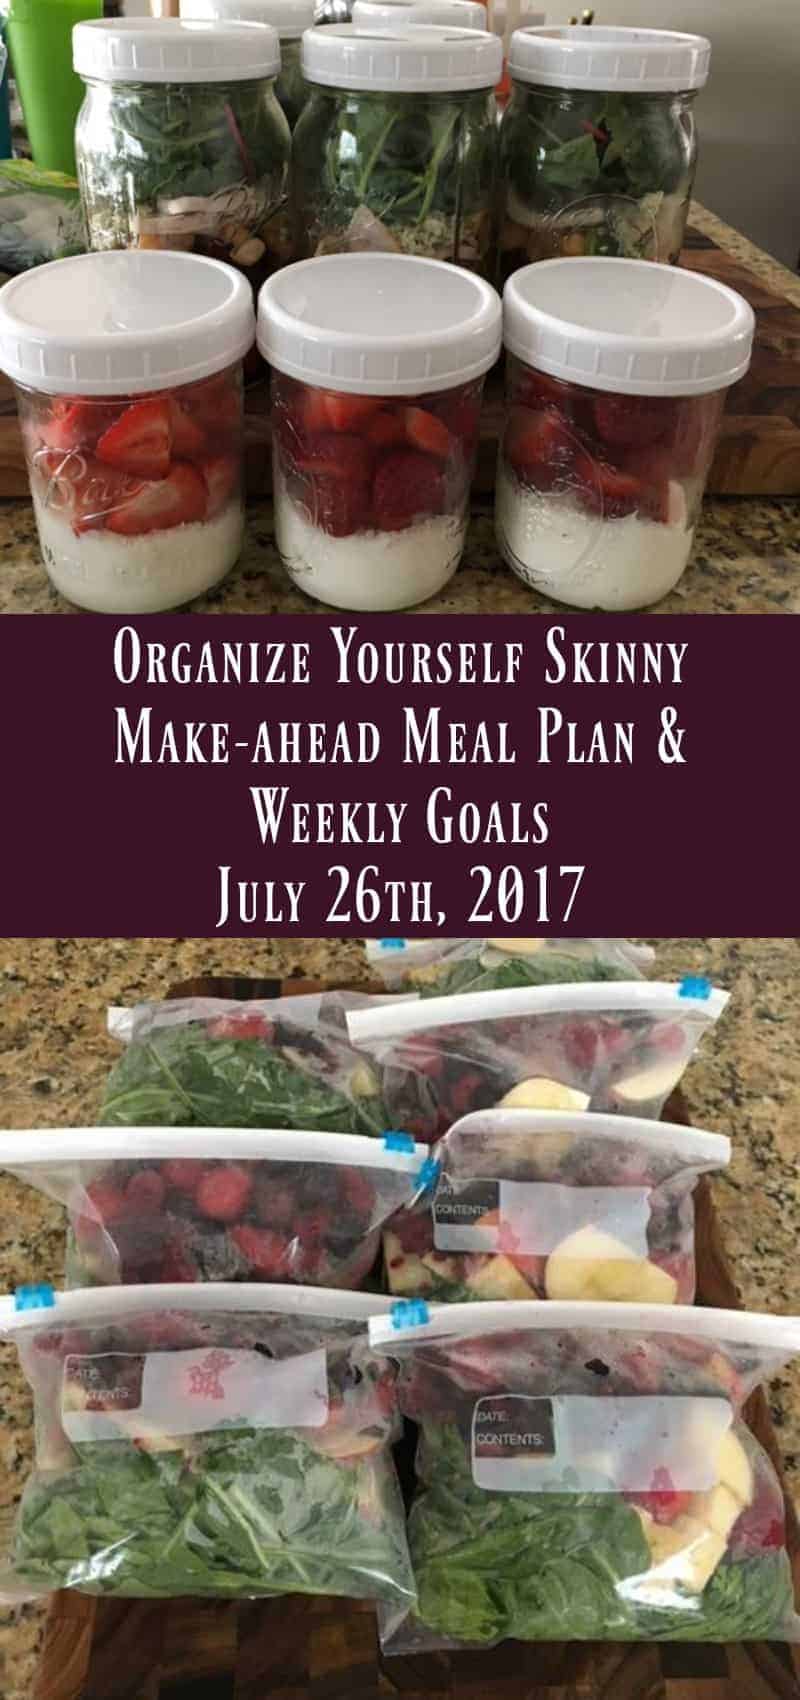 Make-ahead Meal Plan & Weekly Goals July 26 2017